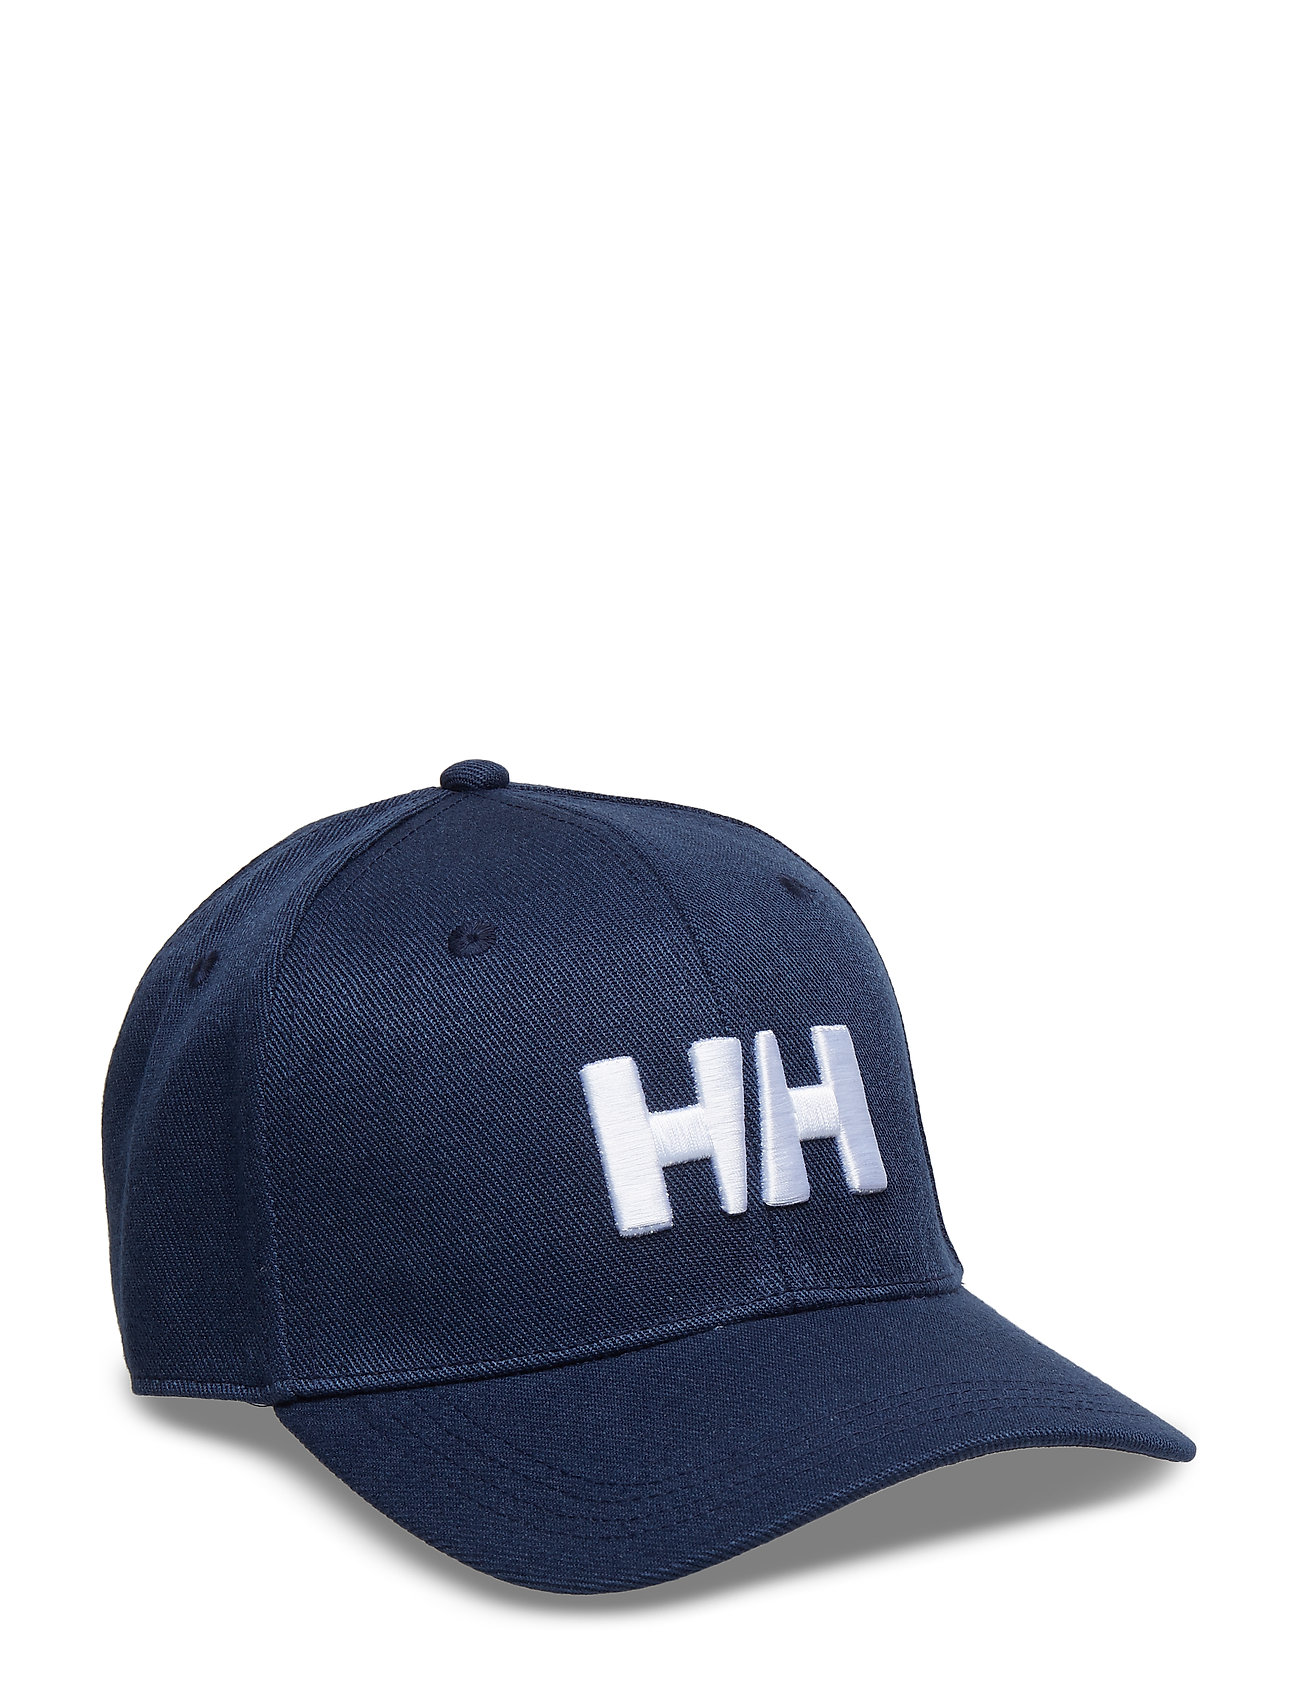 Helly Hansen Hh Brand Cap - Caps | Boozt.com